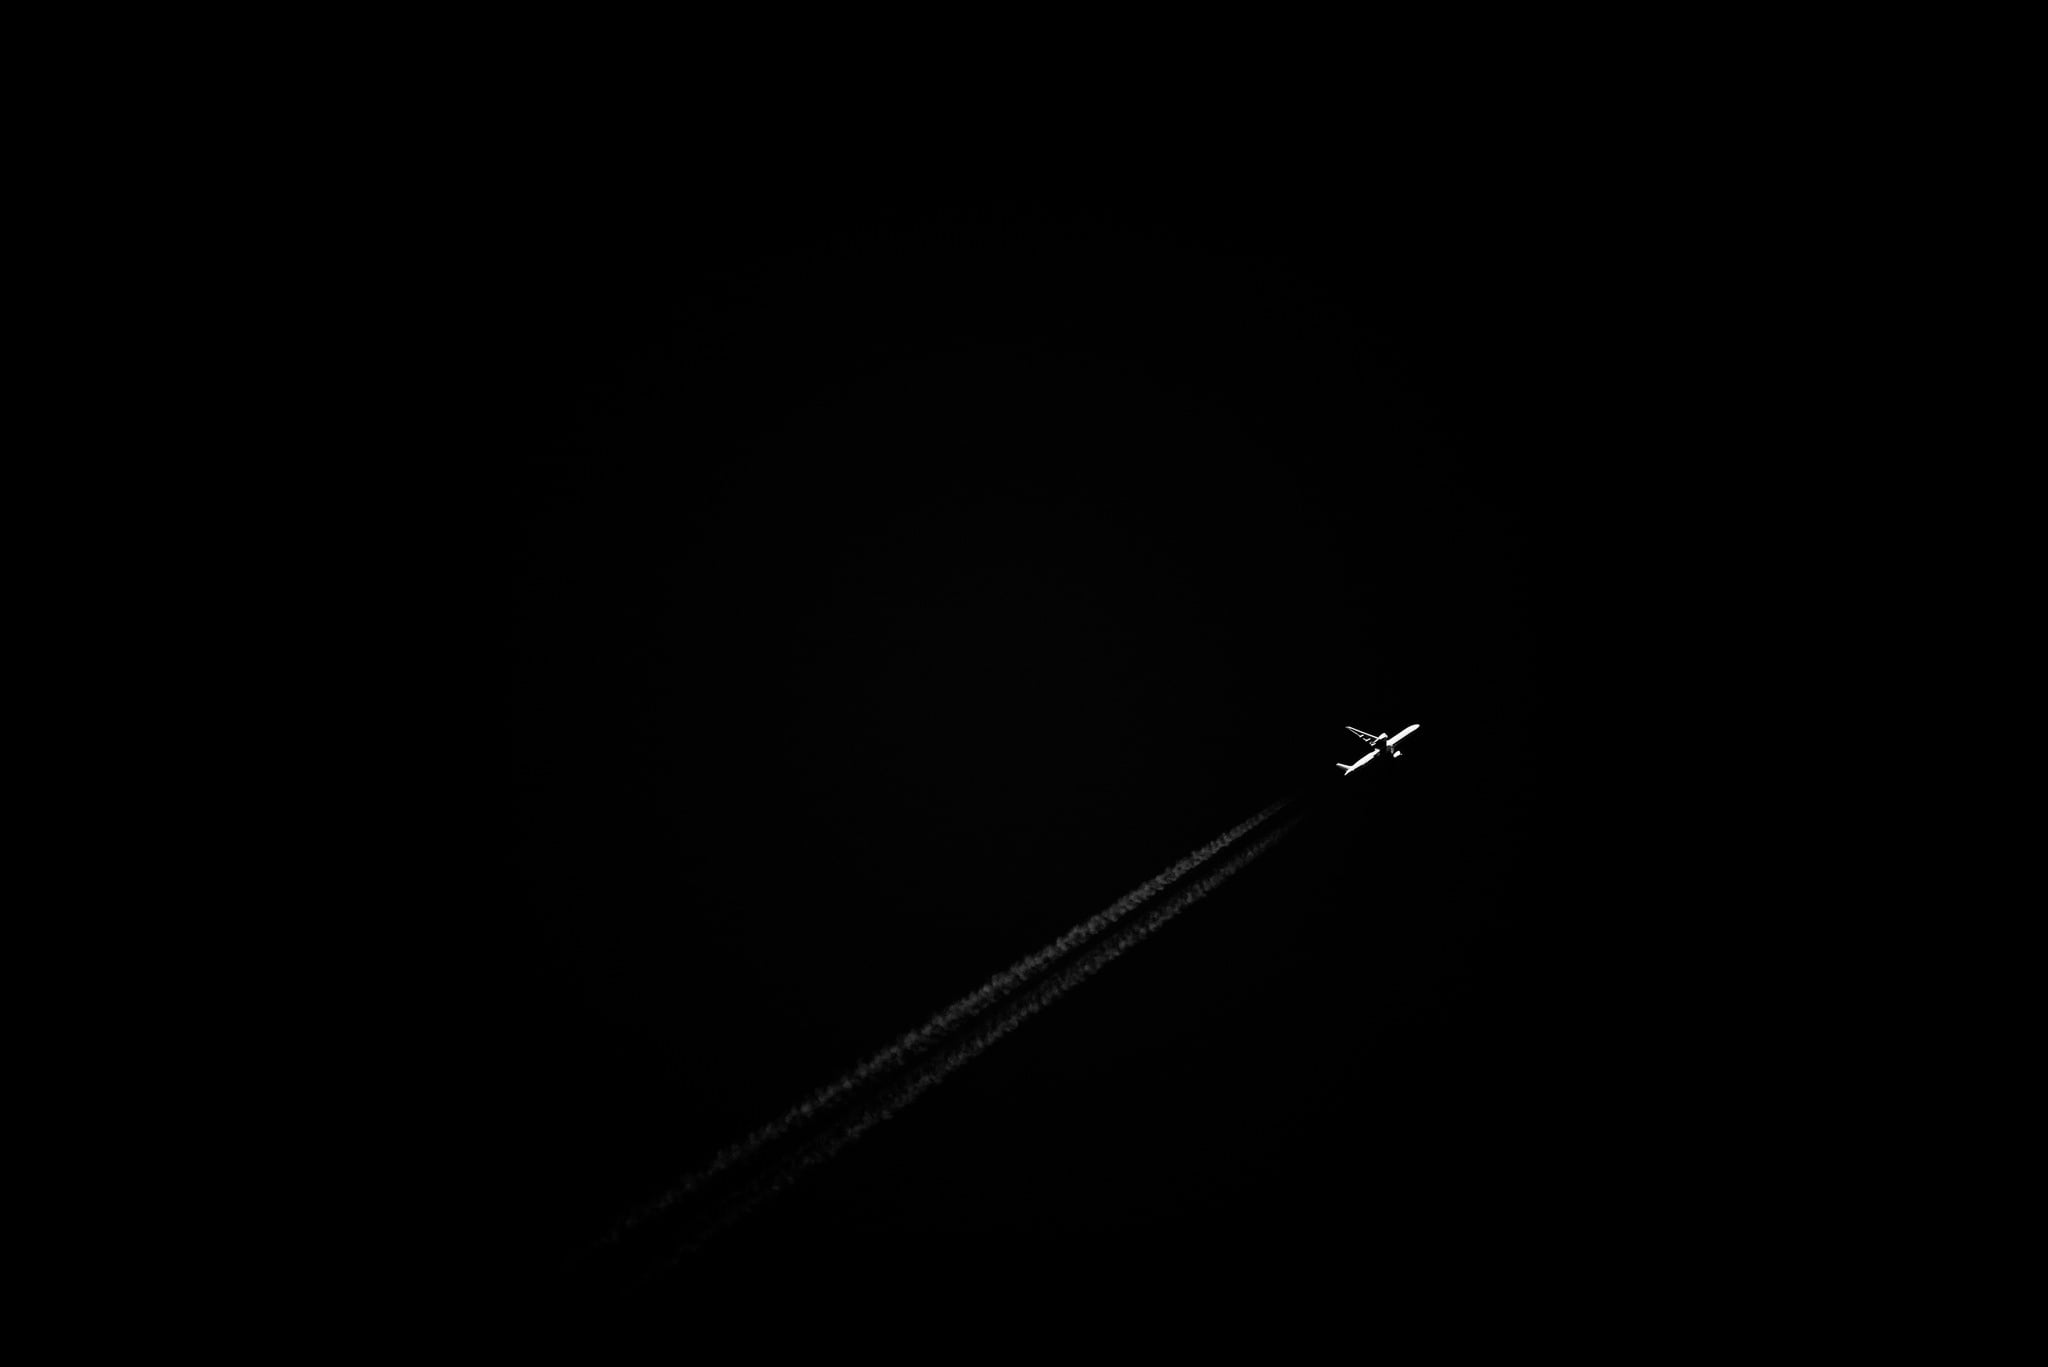 space shuttle, dark, minimalism, vehicle, aircraft